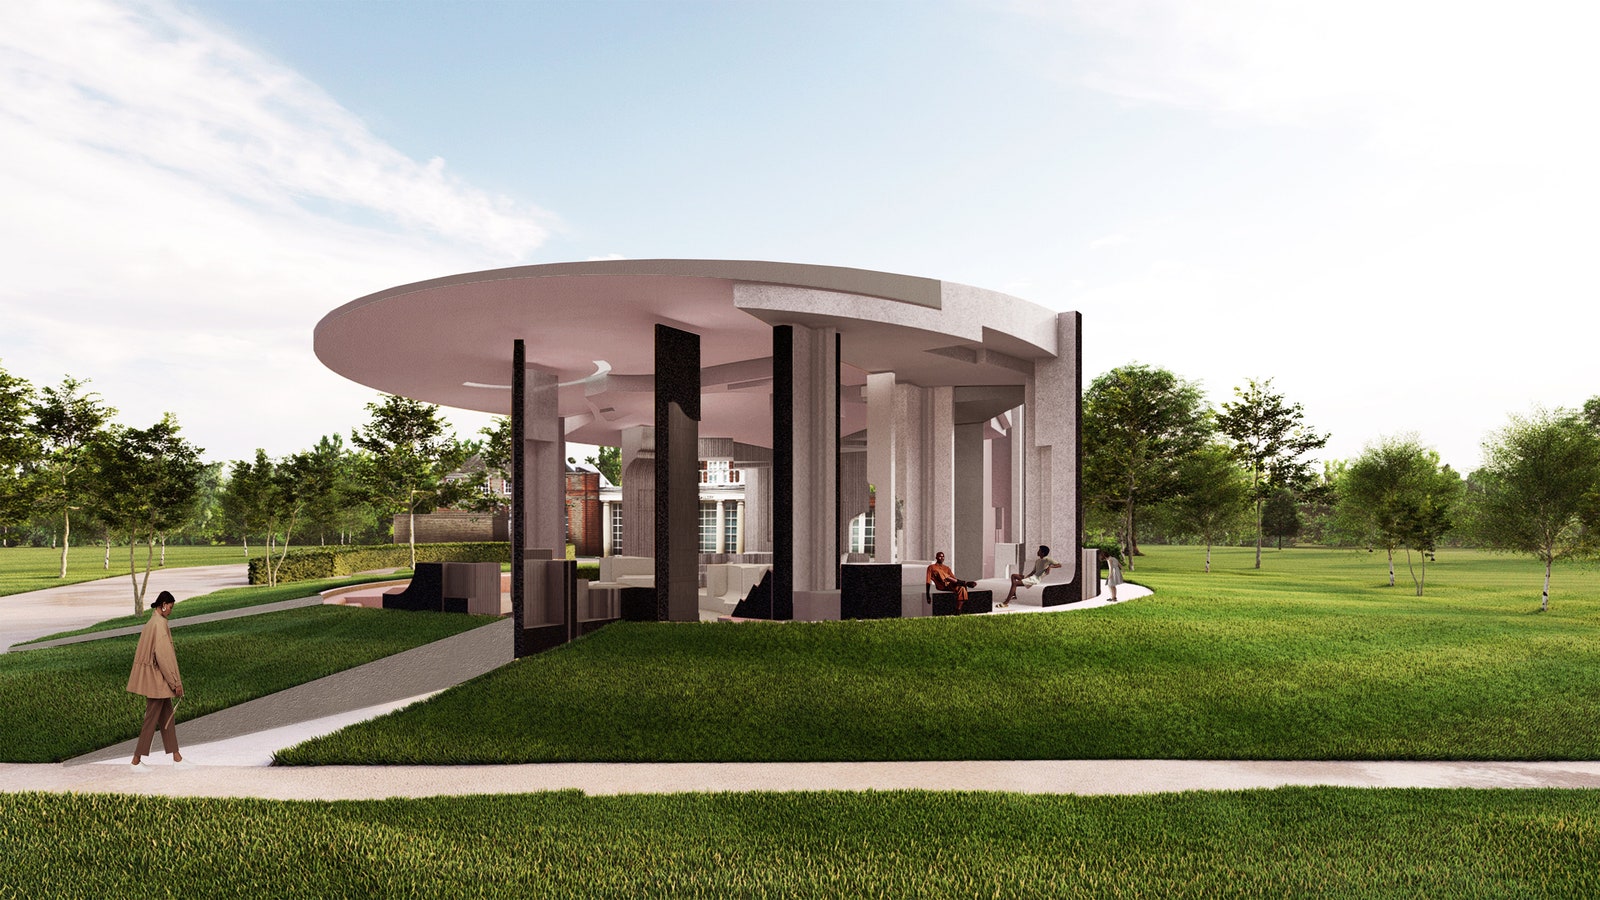 Студия Counterspace построит павильон галереи Серпентайн в 2020 году